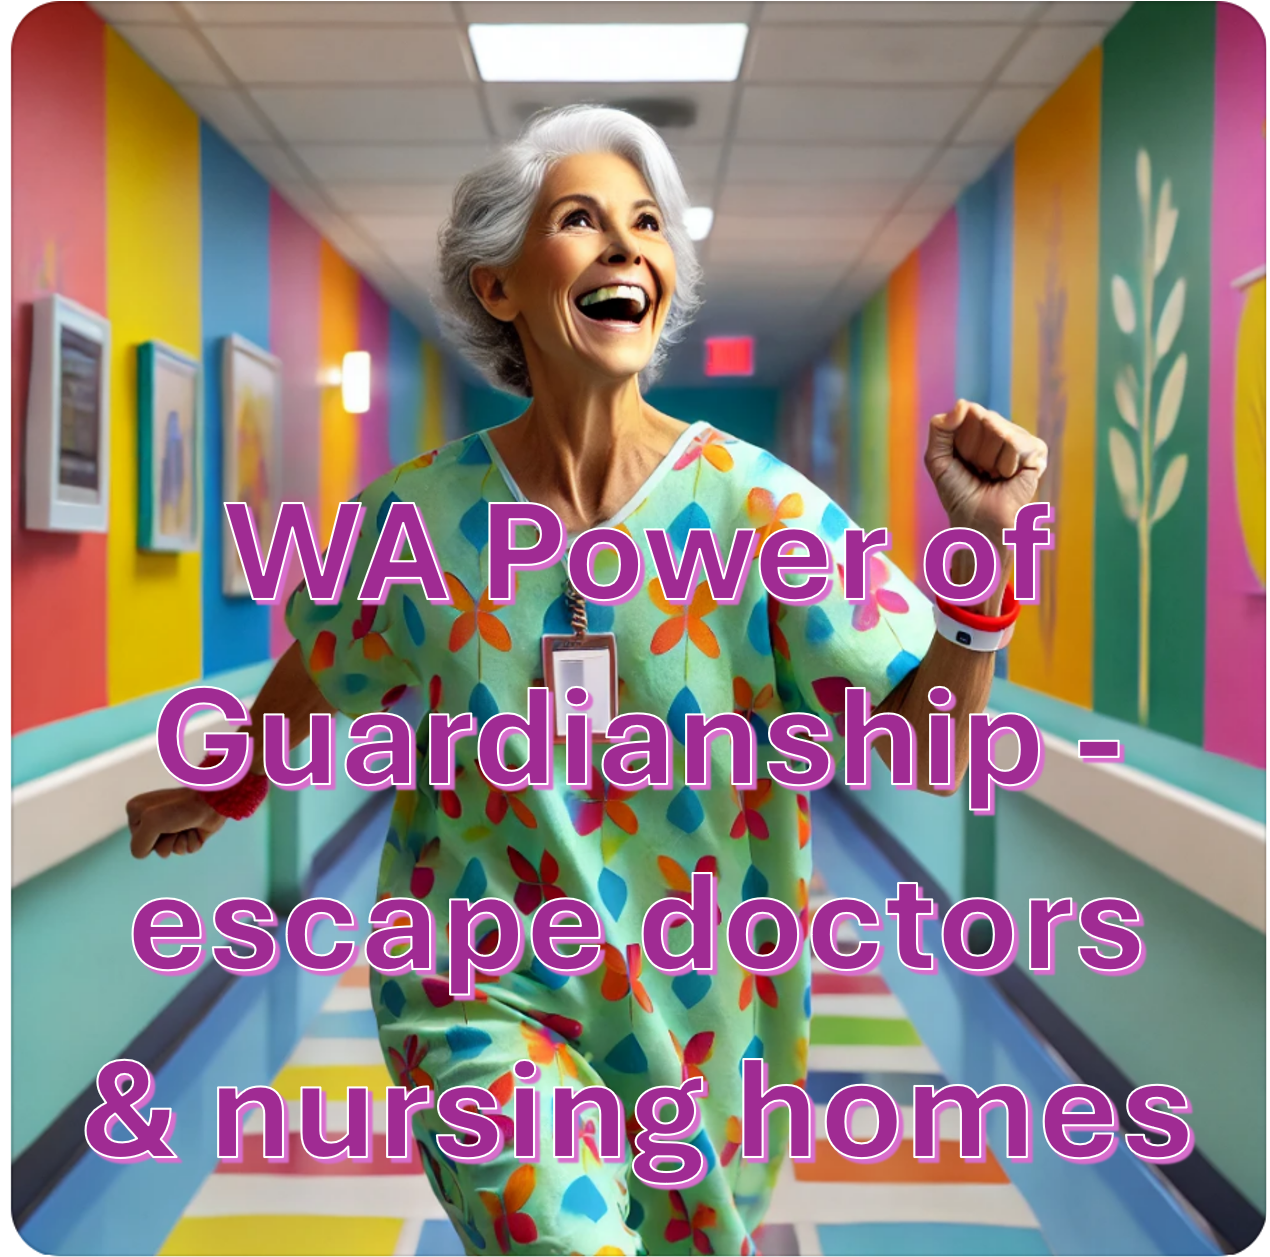 WA Power of Guardianship escape nursing homes and doctors